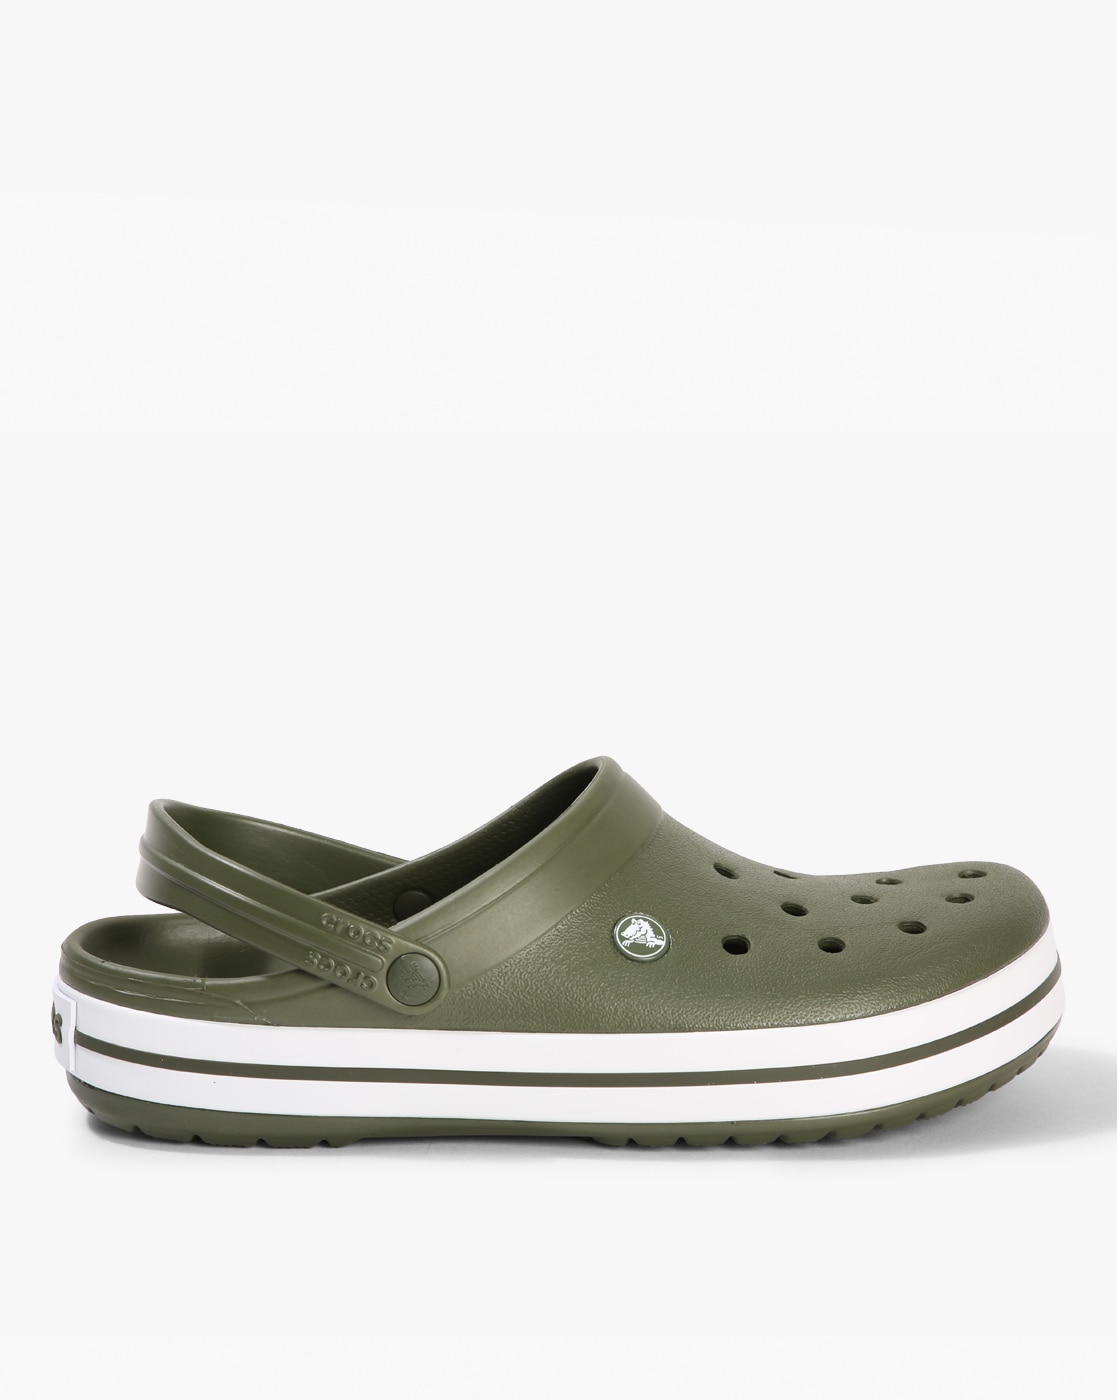 crocs men's clogs online